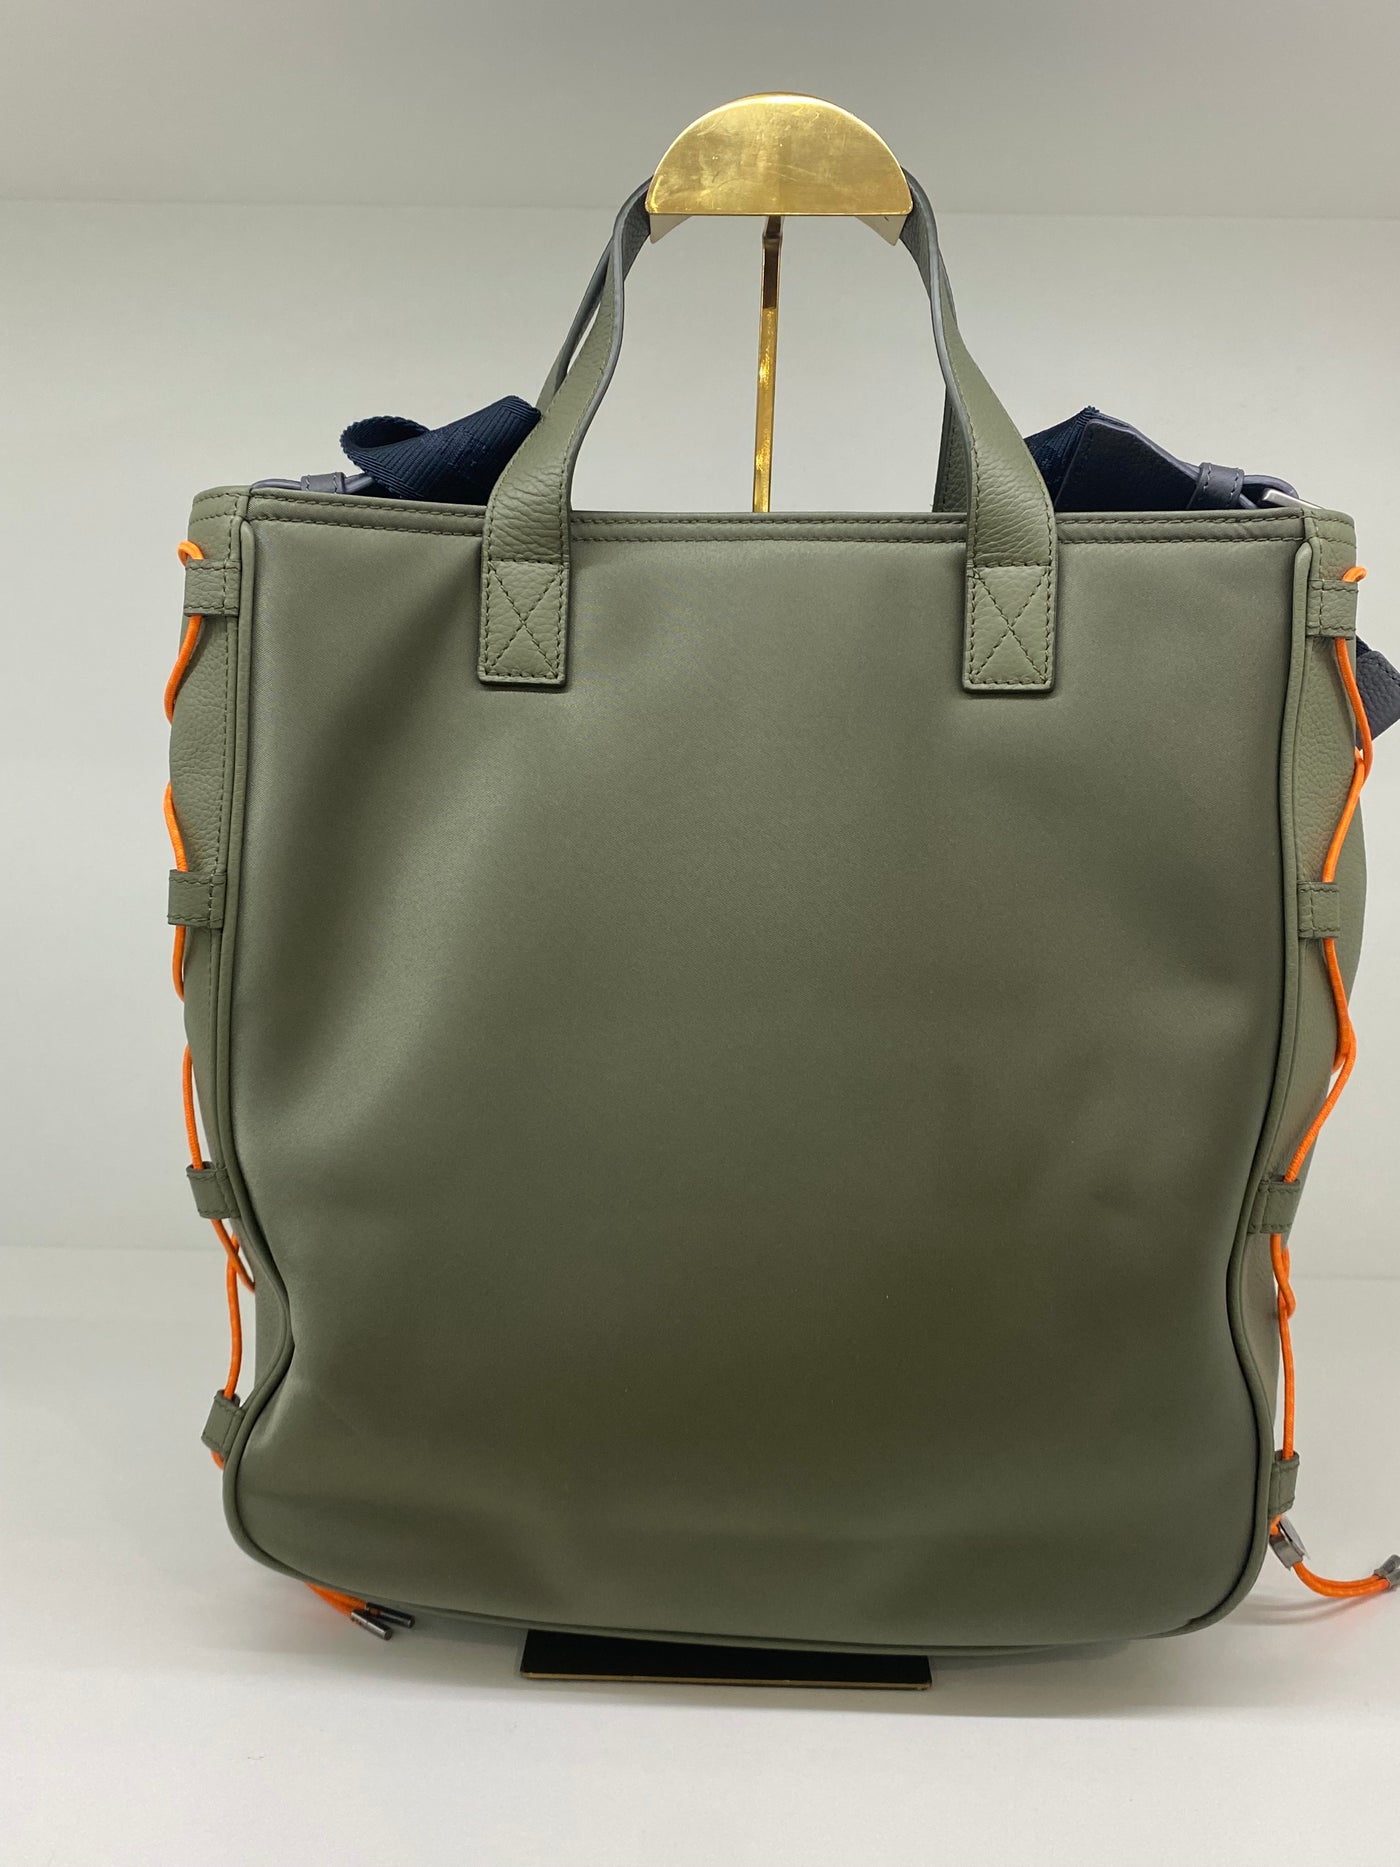 Dior Sacai Tote Mens Bag Limited Edition